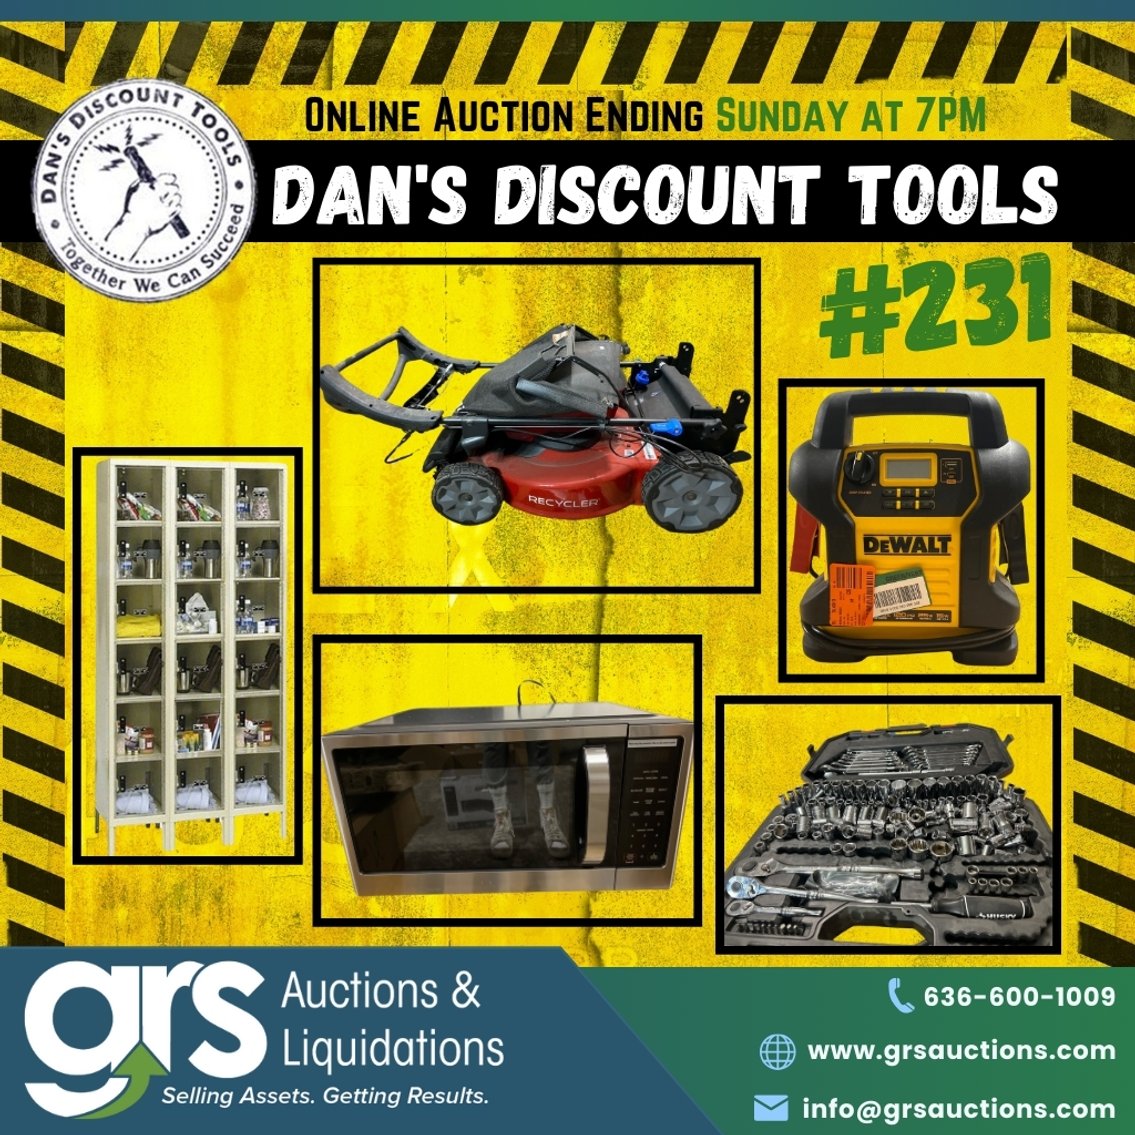 Dan's Discount Tools #231